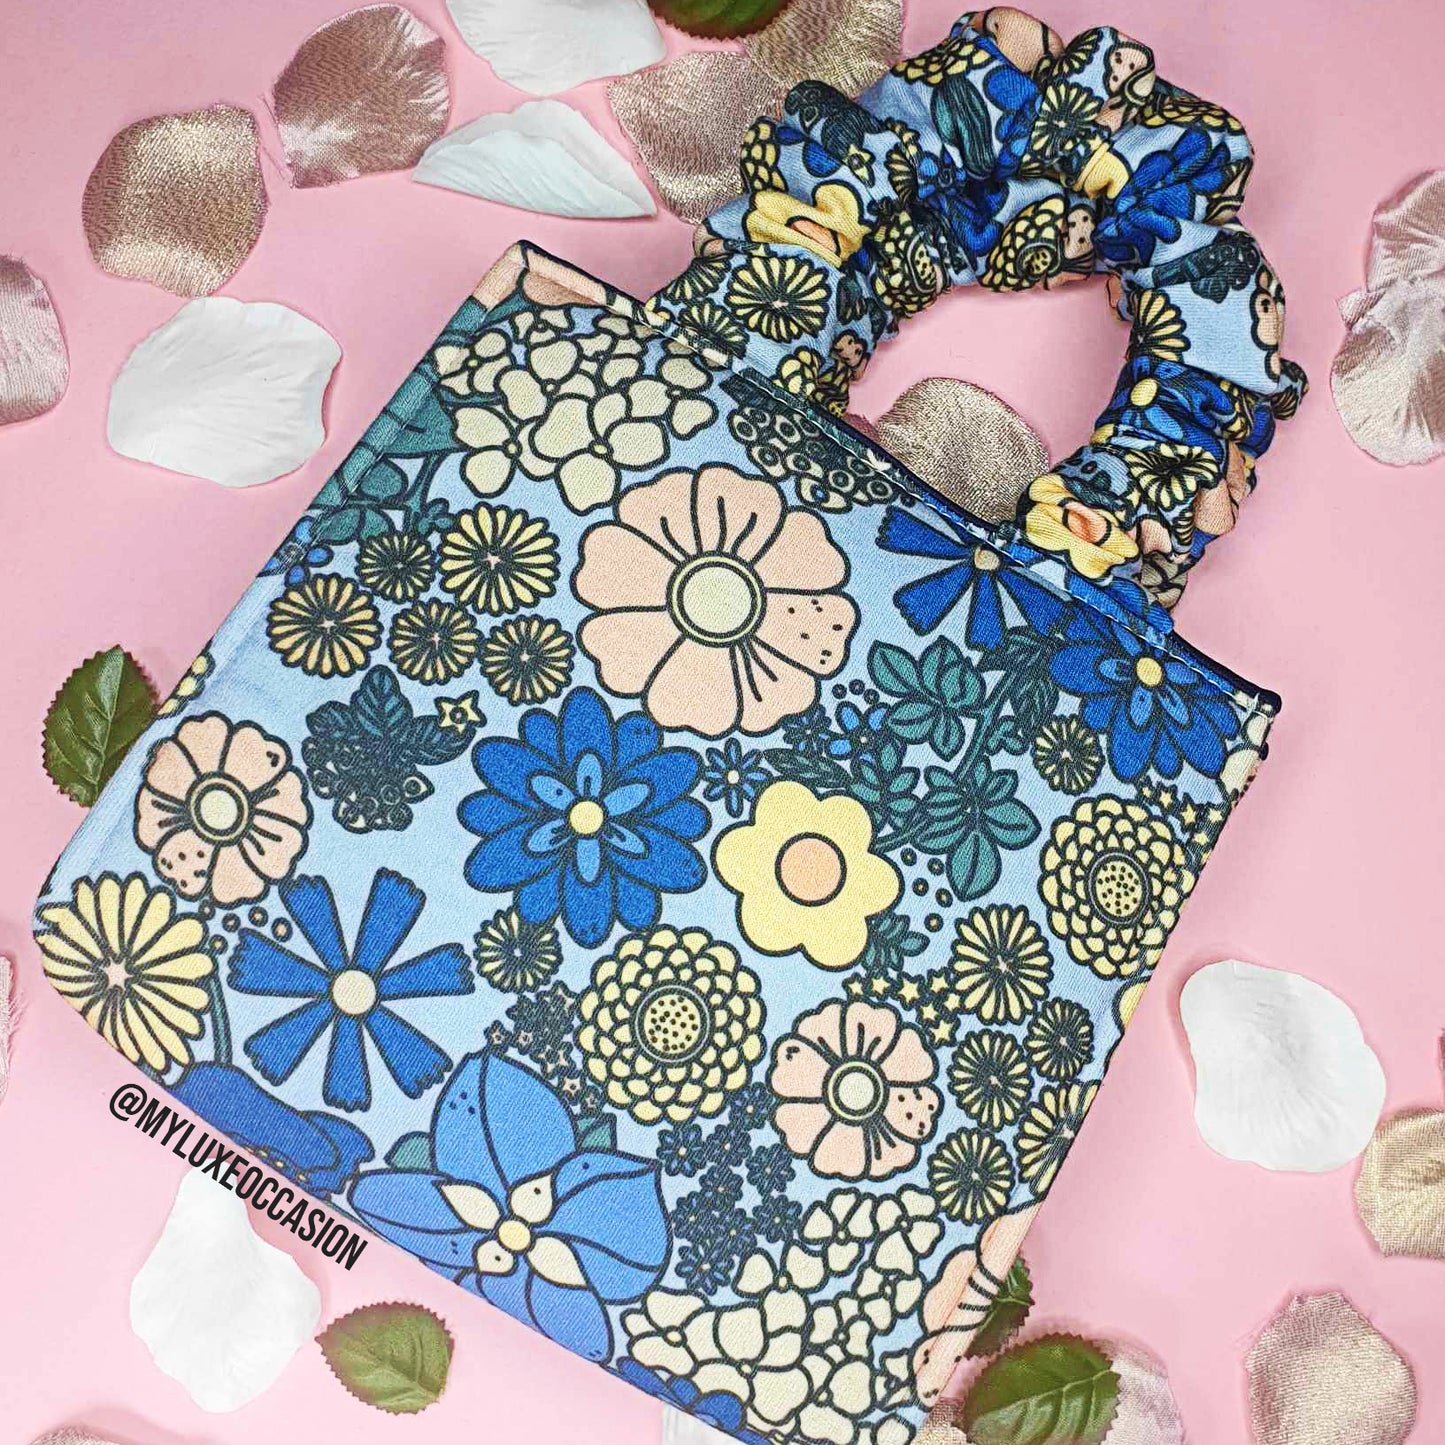 Flower Power 70's Vibe Floral Bag with Scrunchie Handles - Retro Blue